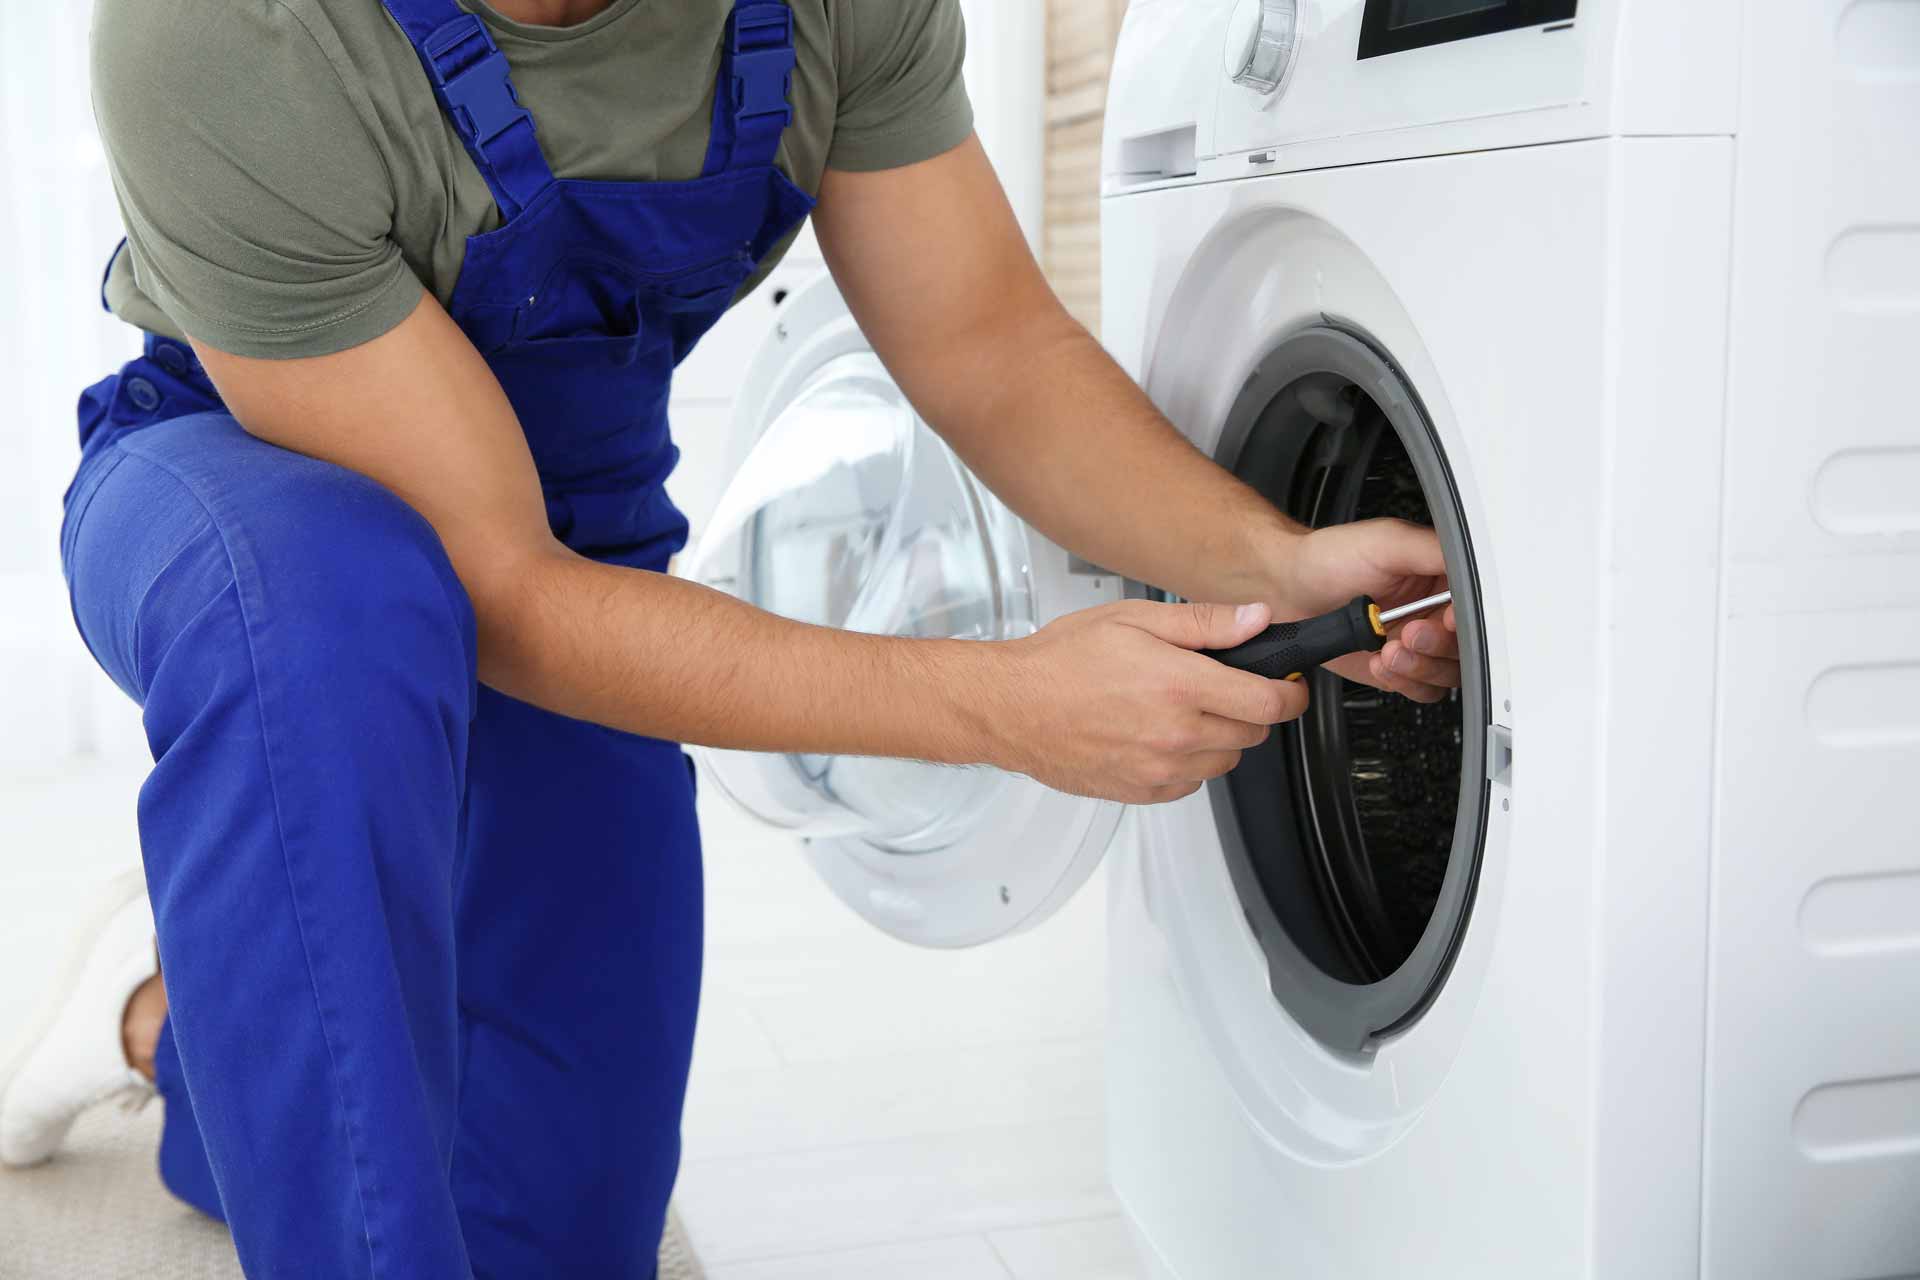 Appliance repair technician kneeling to repair a washer/dryer